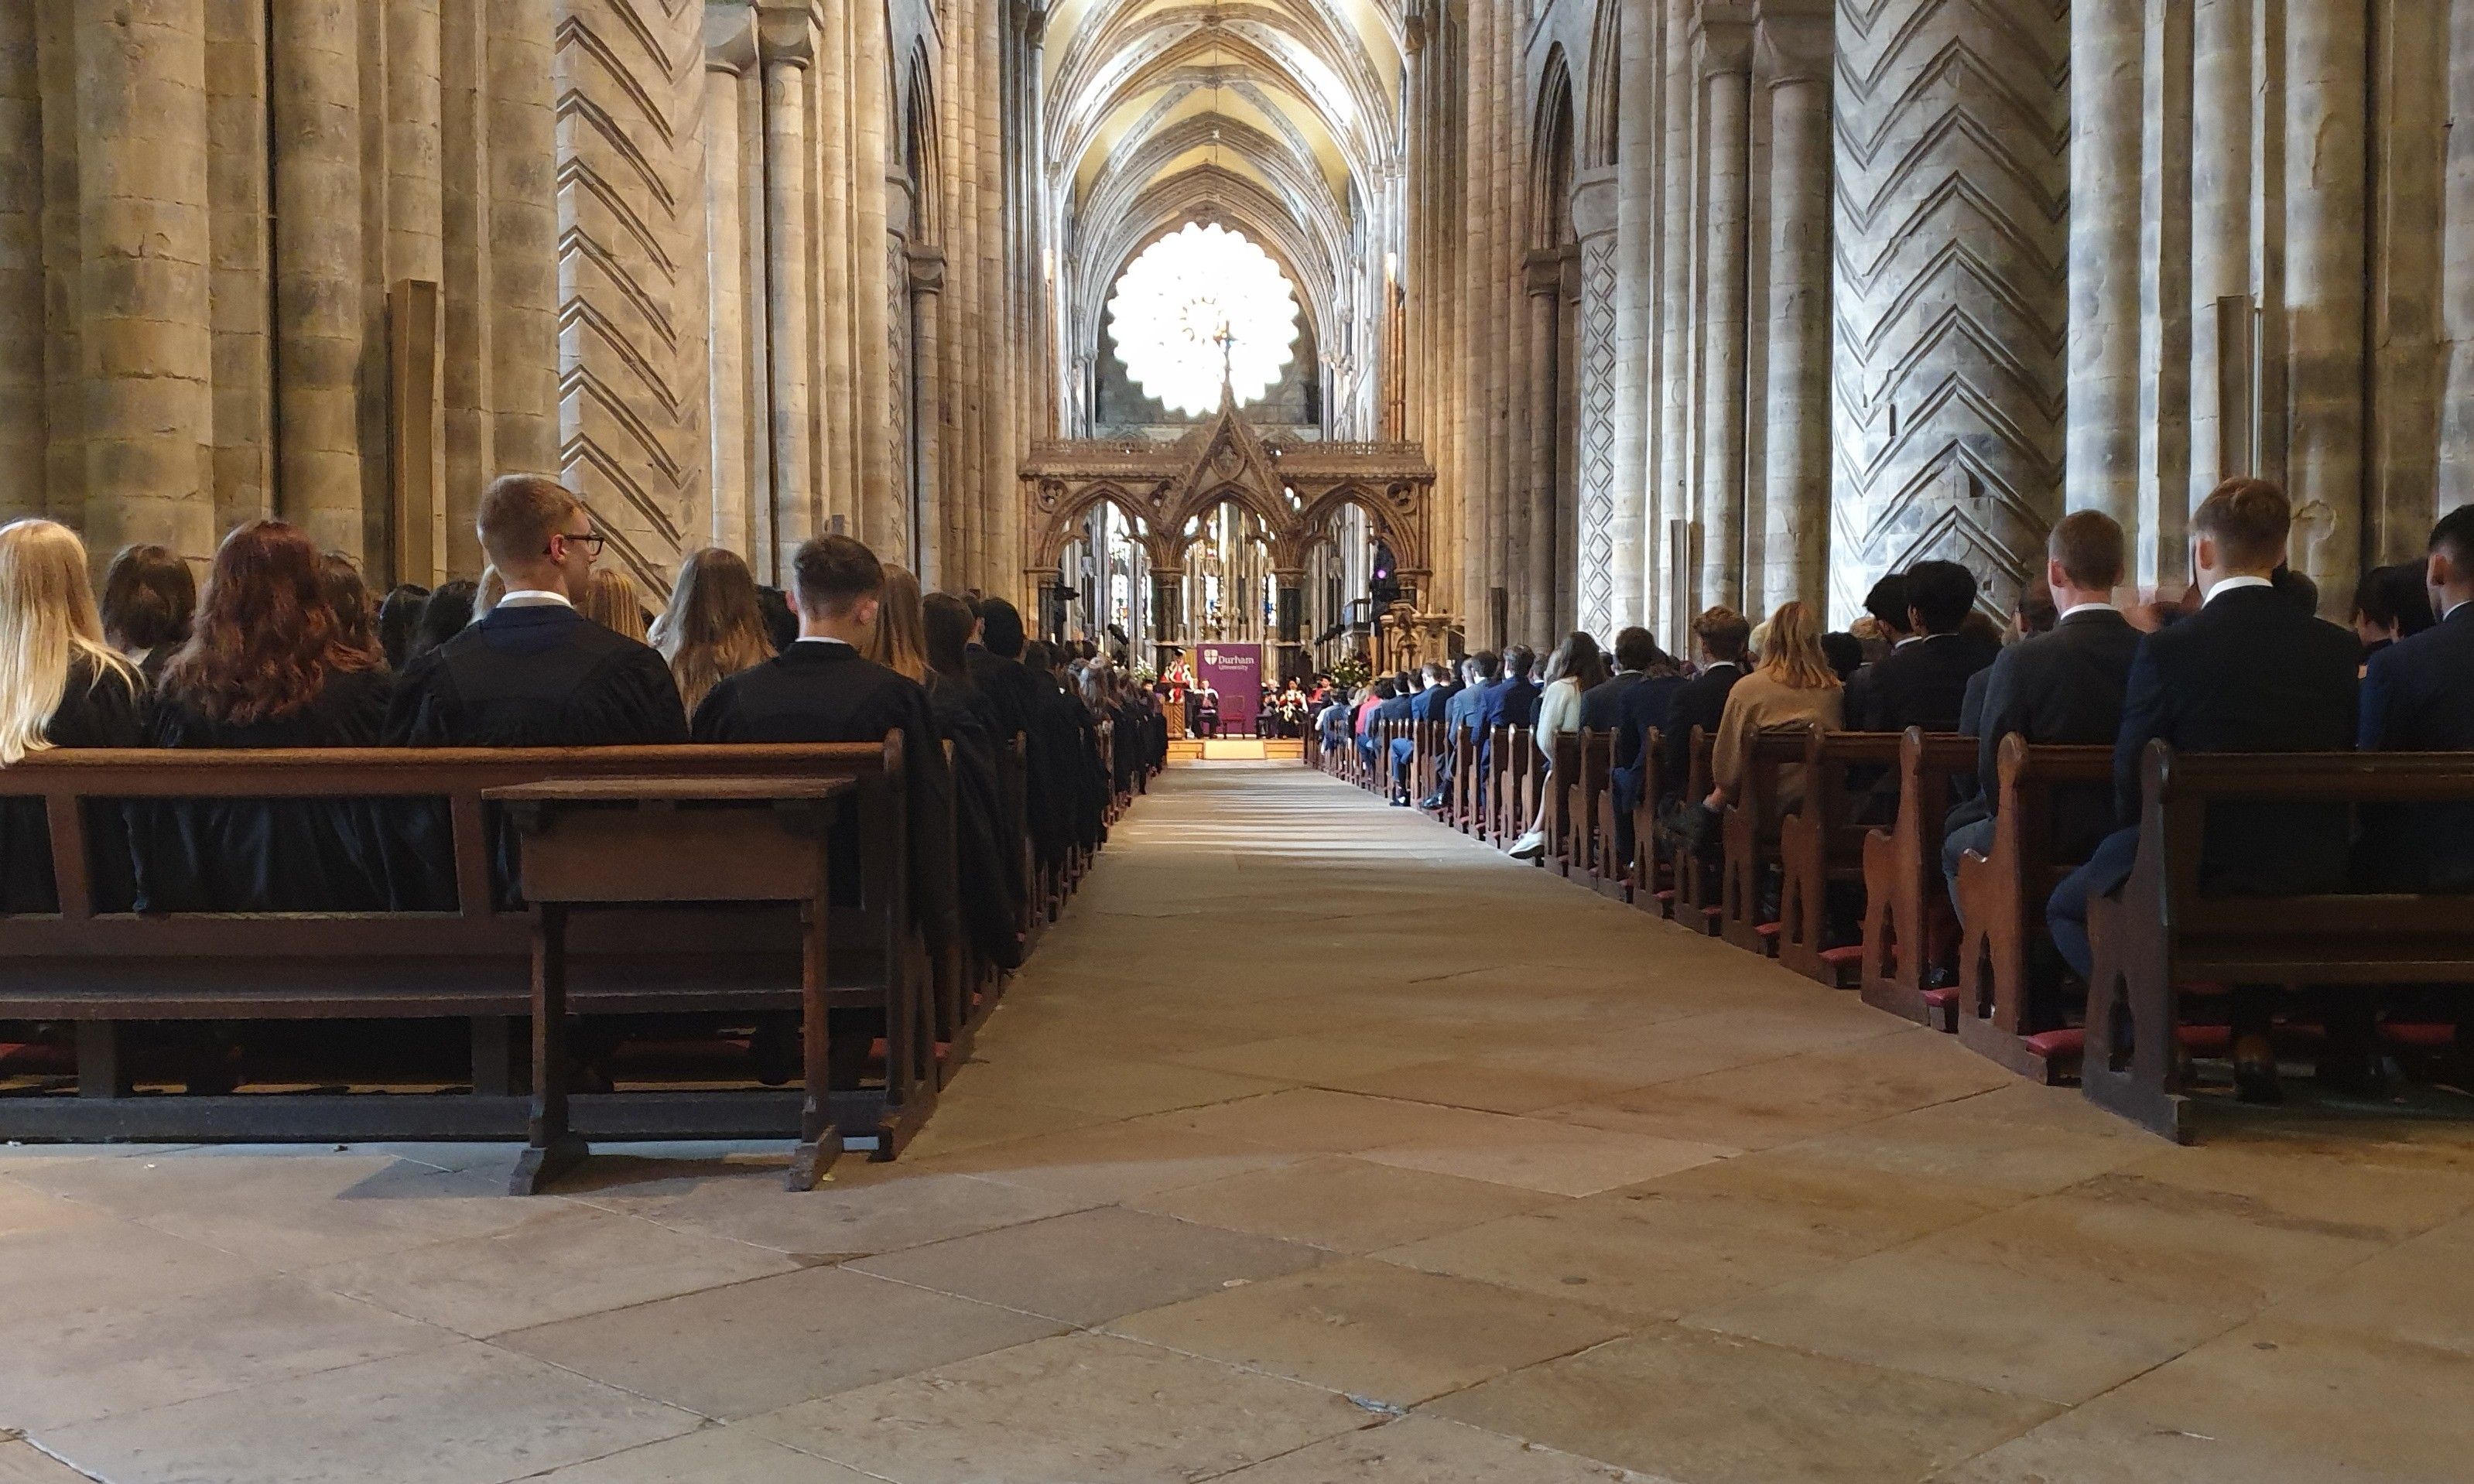 Durham Cathedral interior during Matriculation